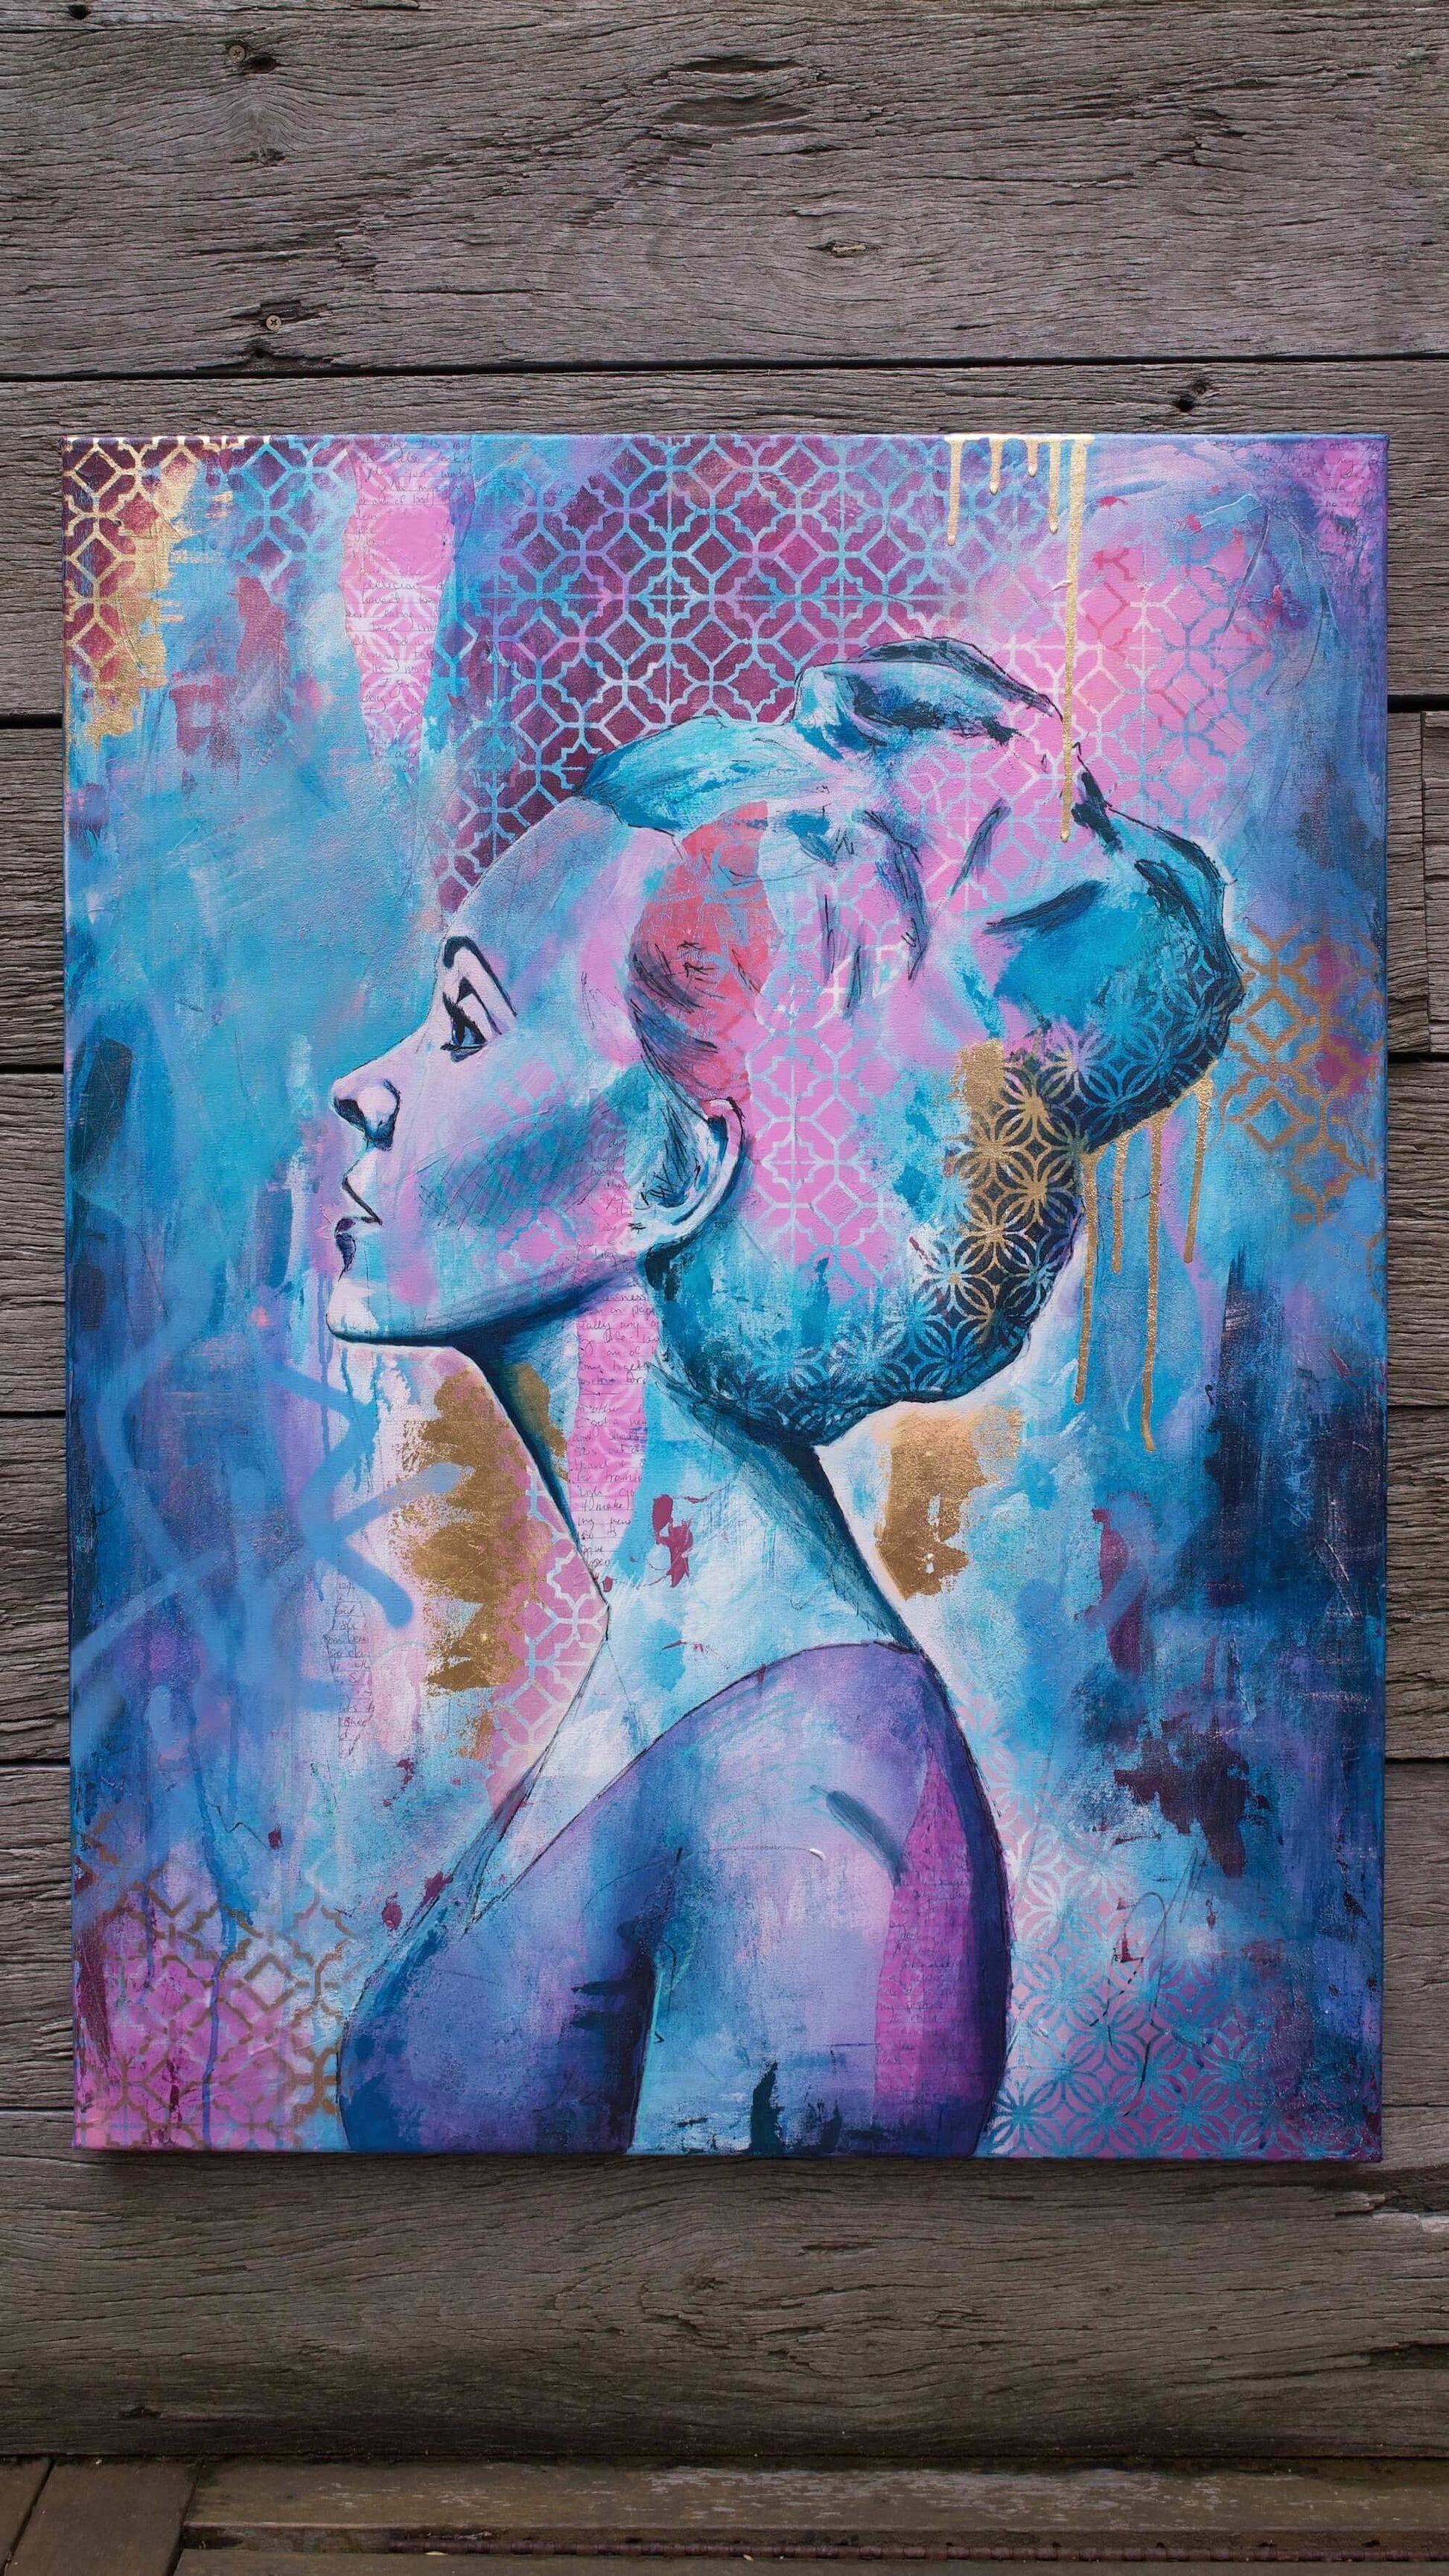 art melbourne street art in melbourne blue woman portrait of a woman art online